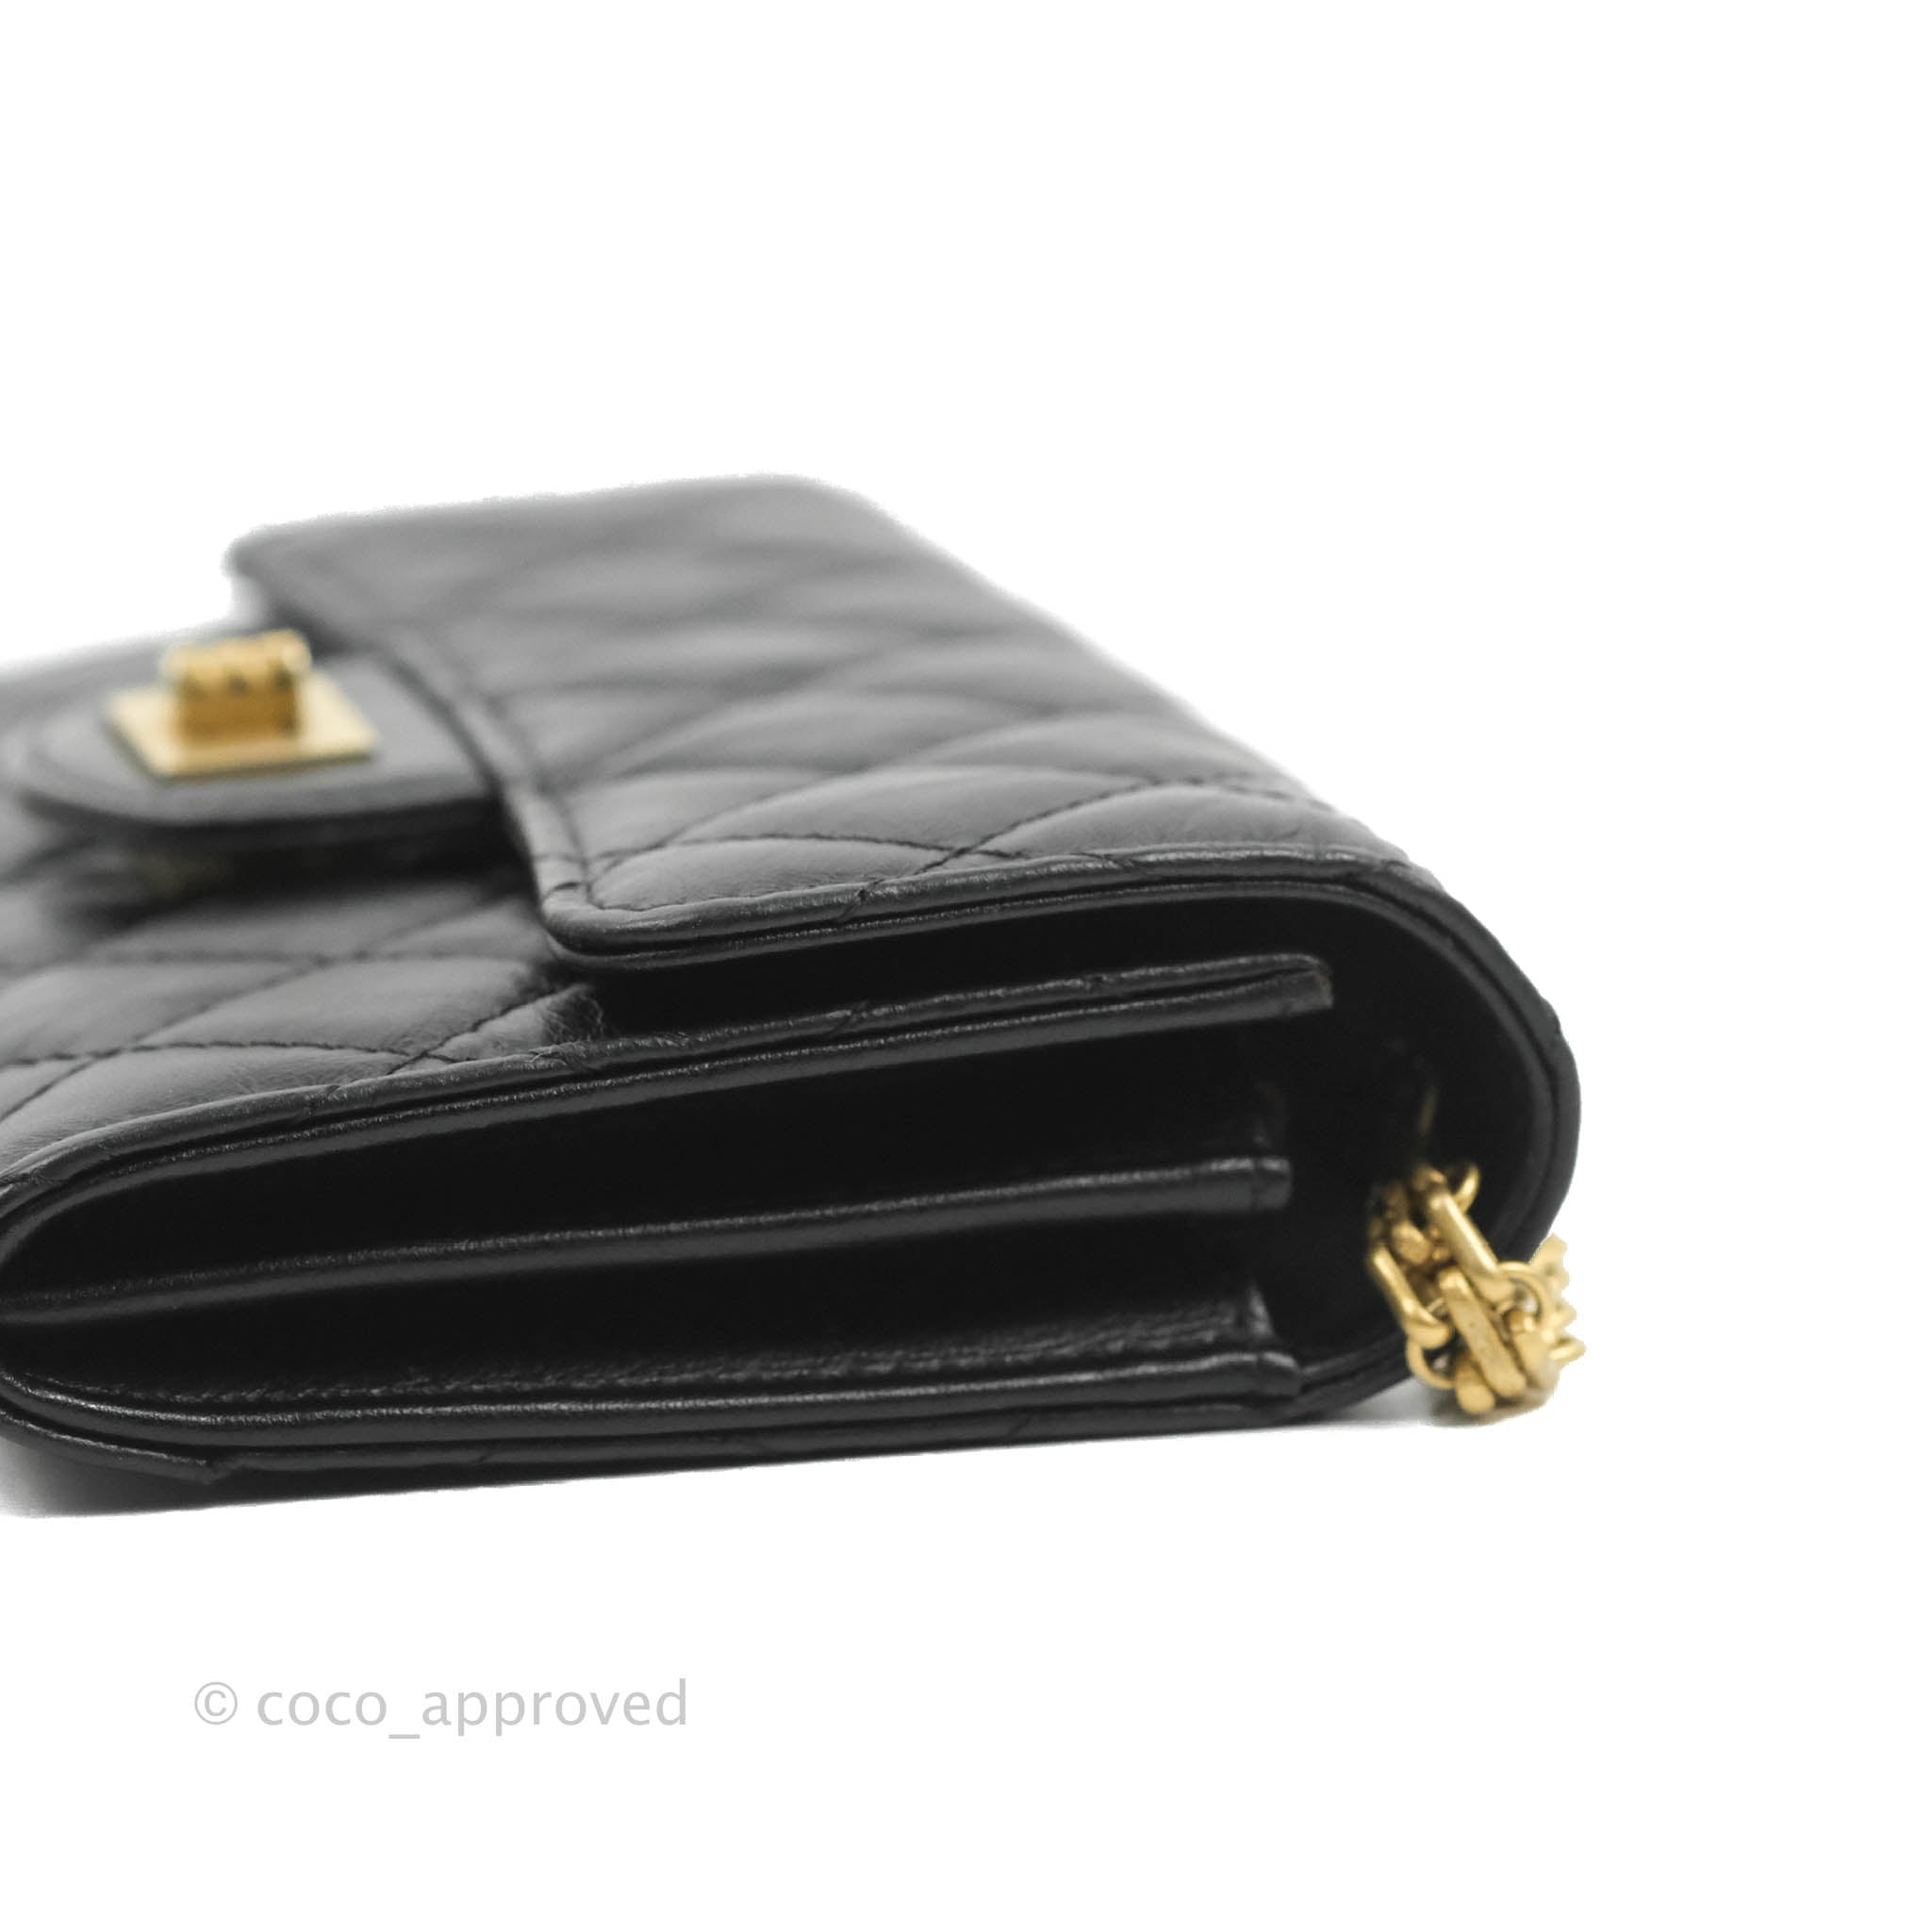 Chanel - Rare Chanel Gold Bar Evening Clutch Bag